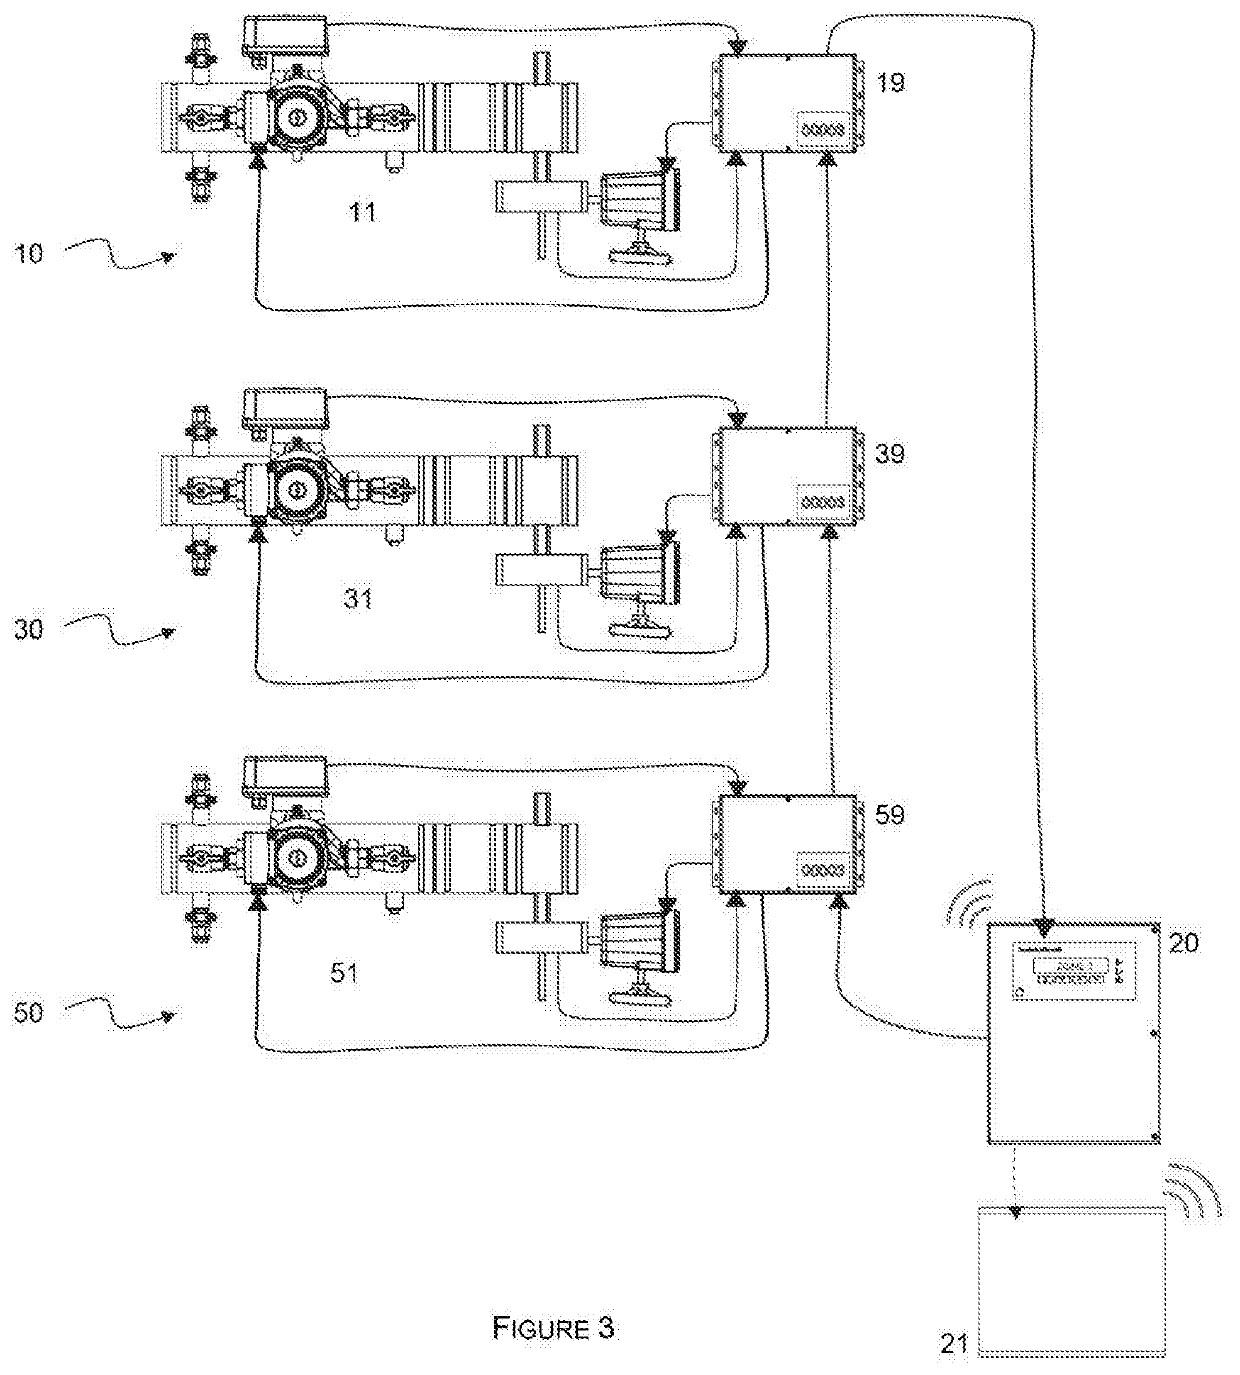 Assembly, system and method for testing a sprinkler system